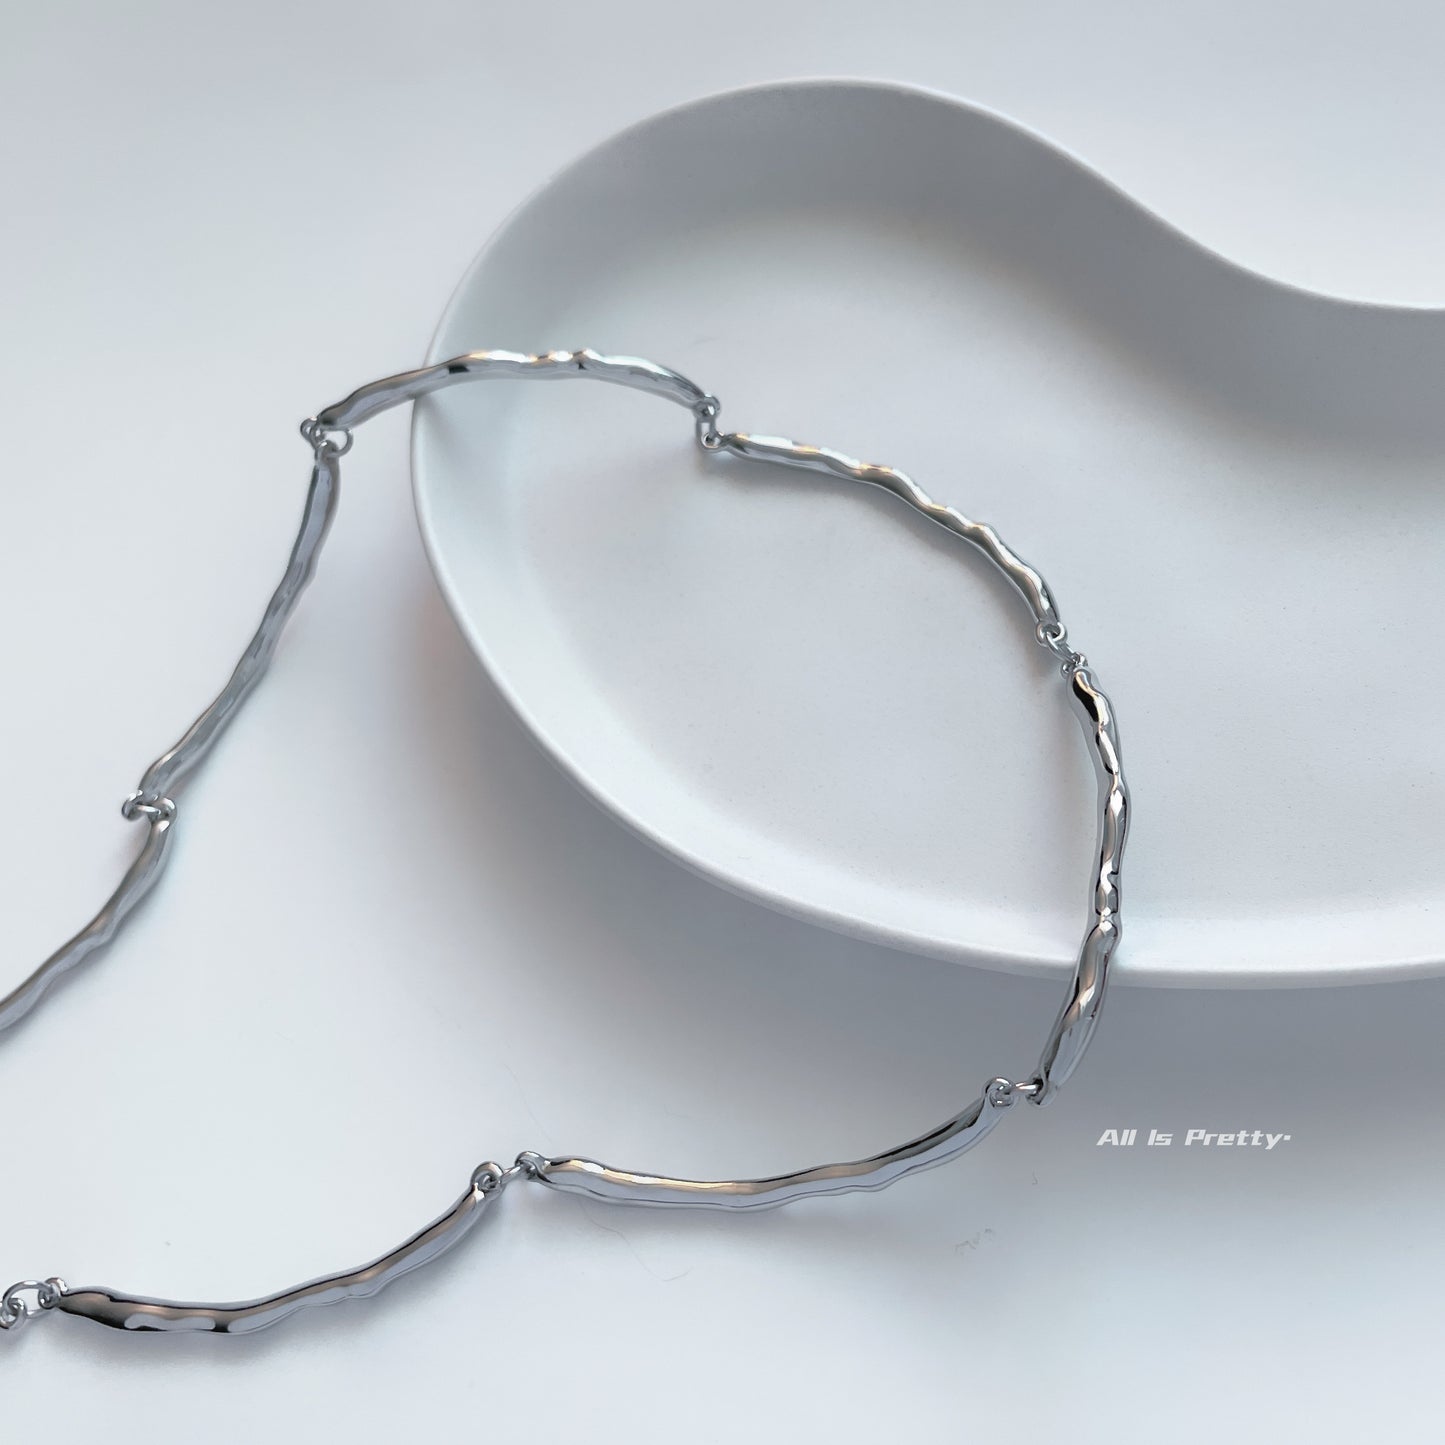 Irregular link chain necklace